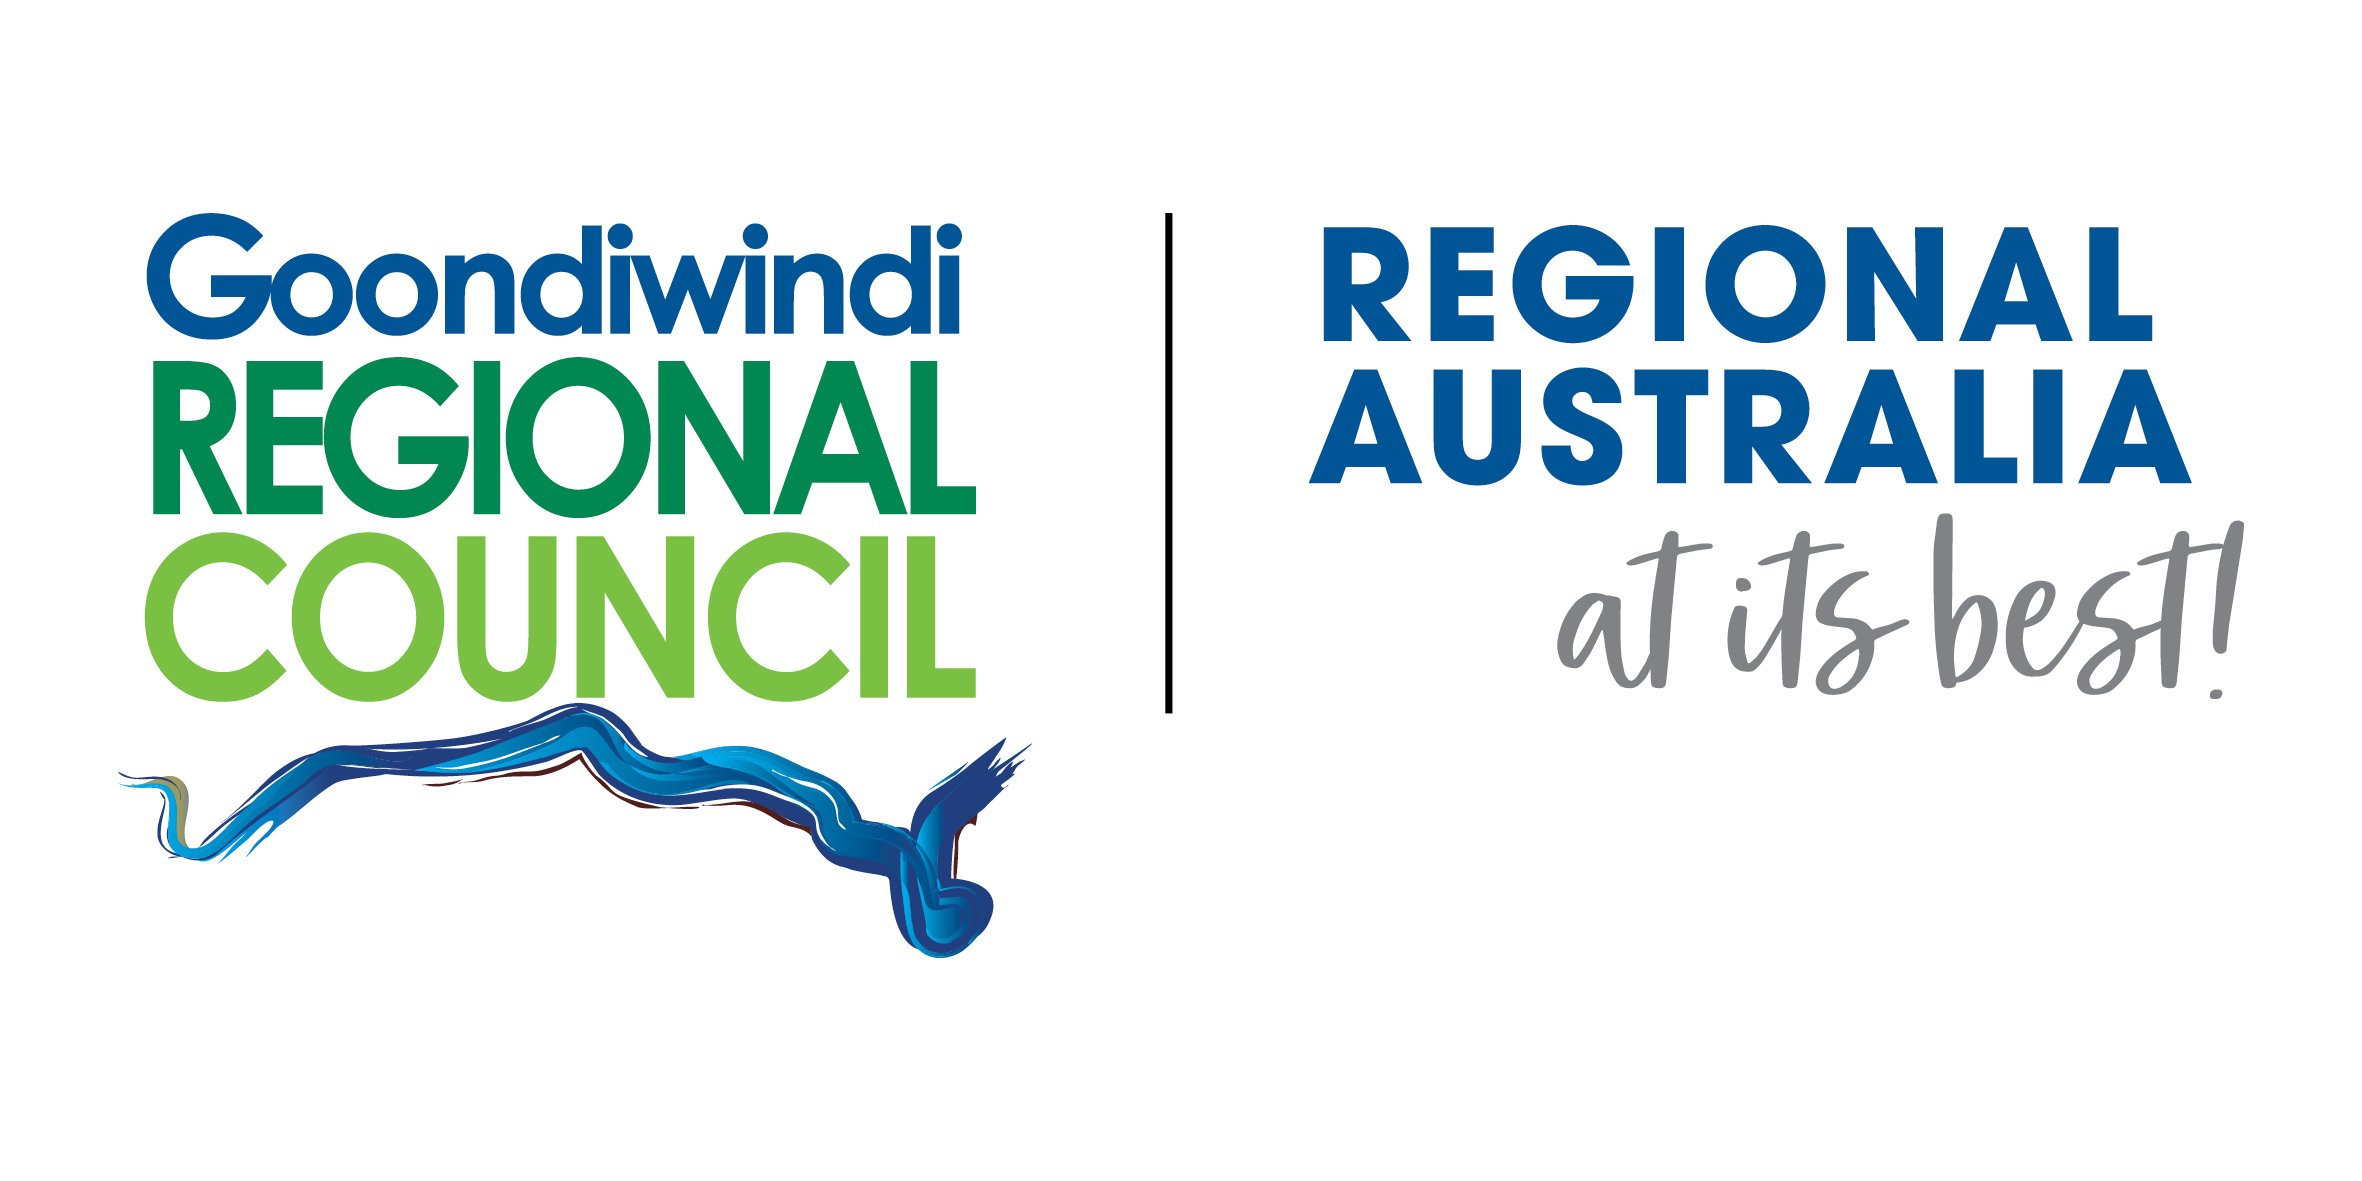 GRC regional aust at its best logo.jpg